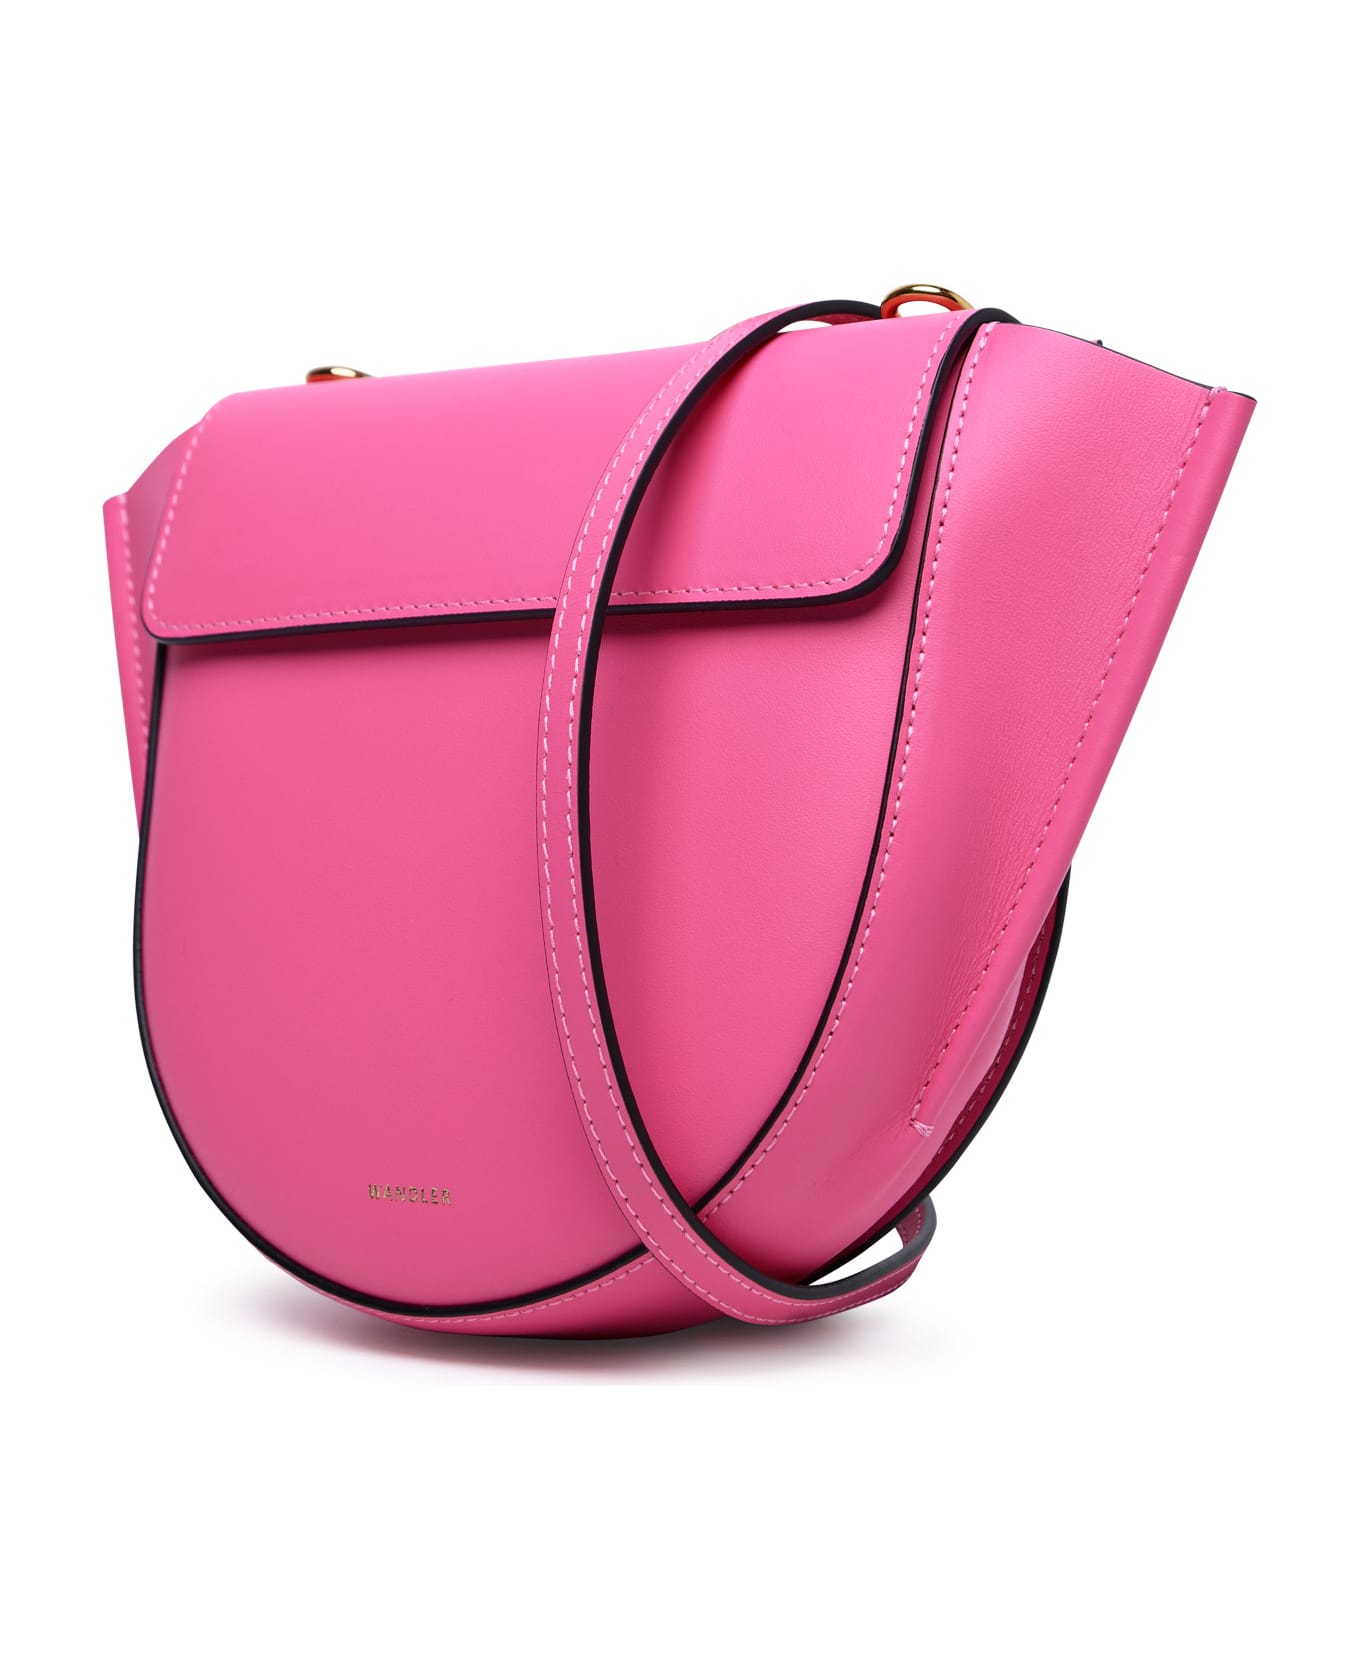 Wandler 'hortensia' Mini Bag In Pink Calf Leather - Fuchsia トートバッグ